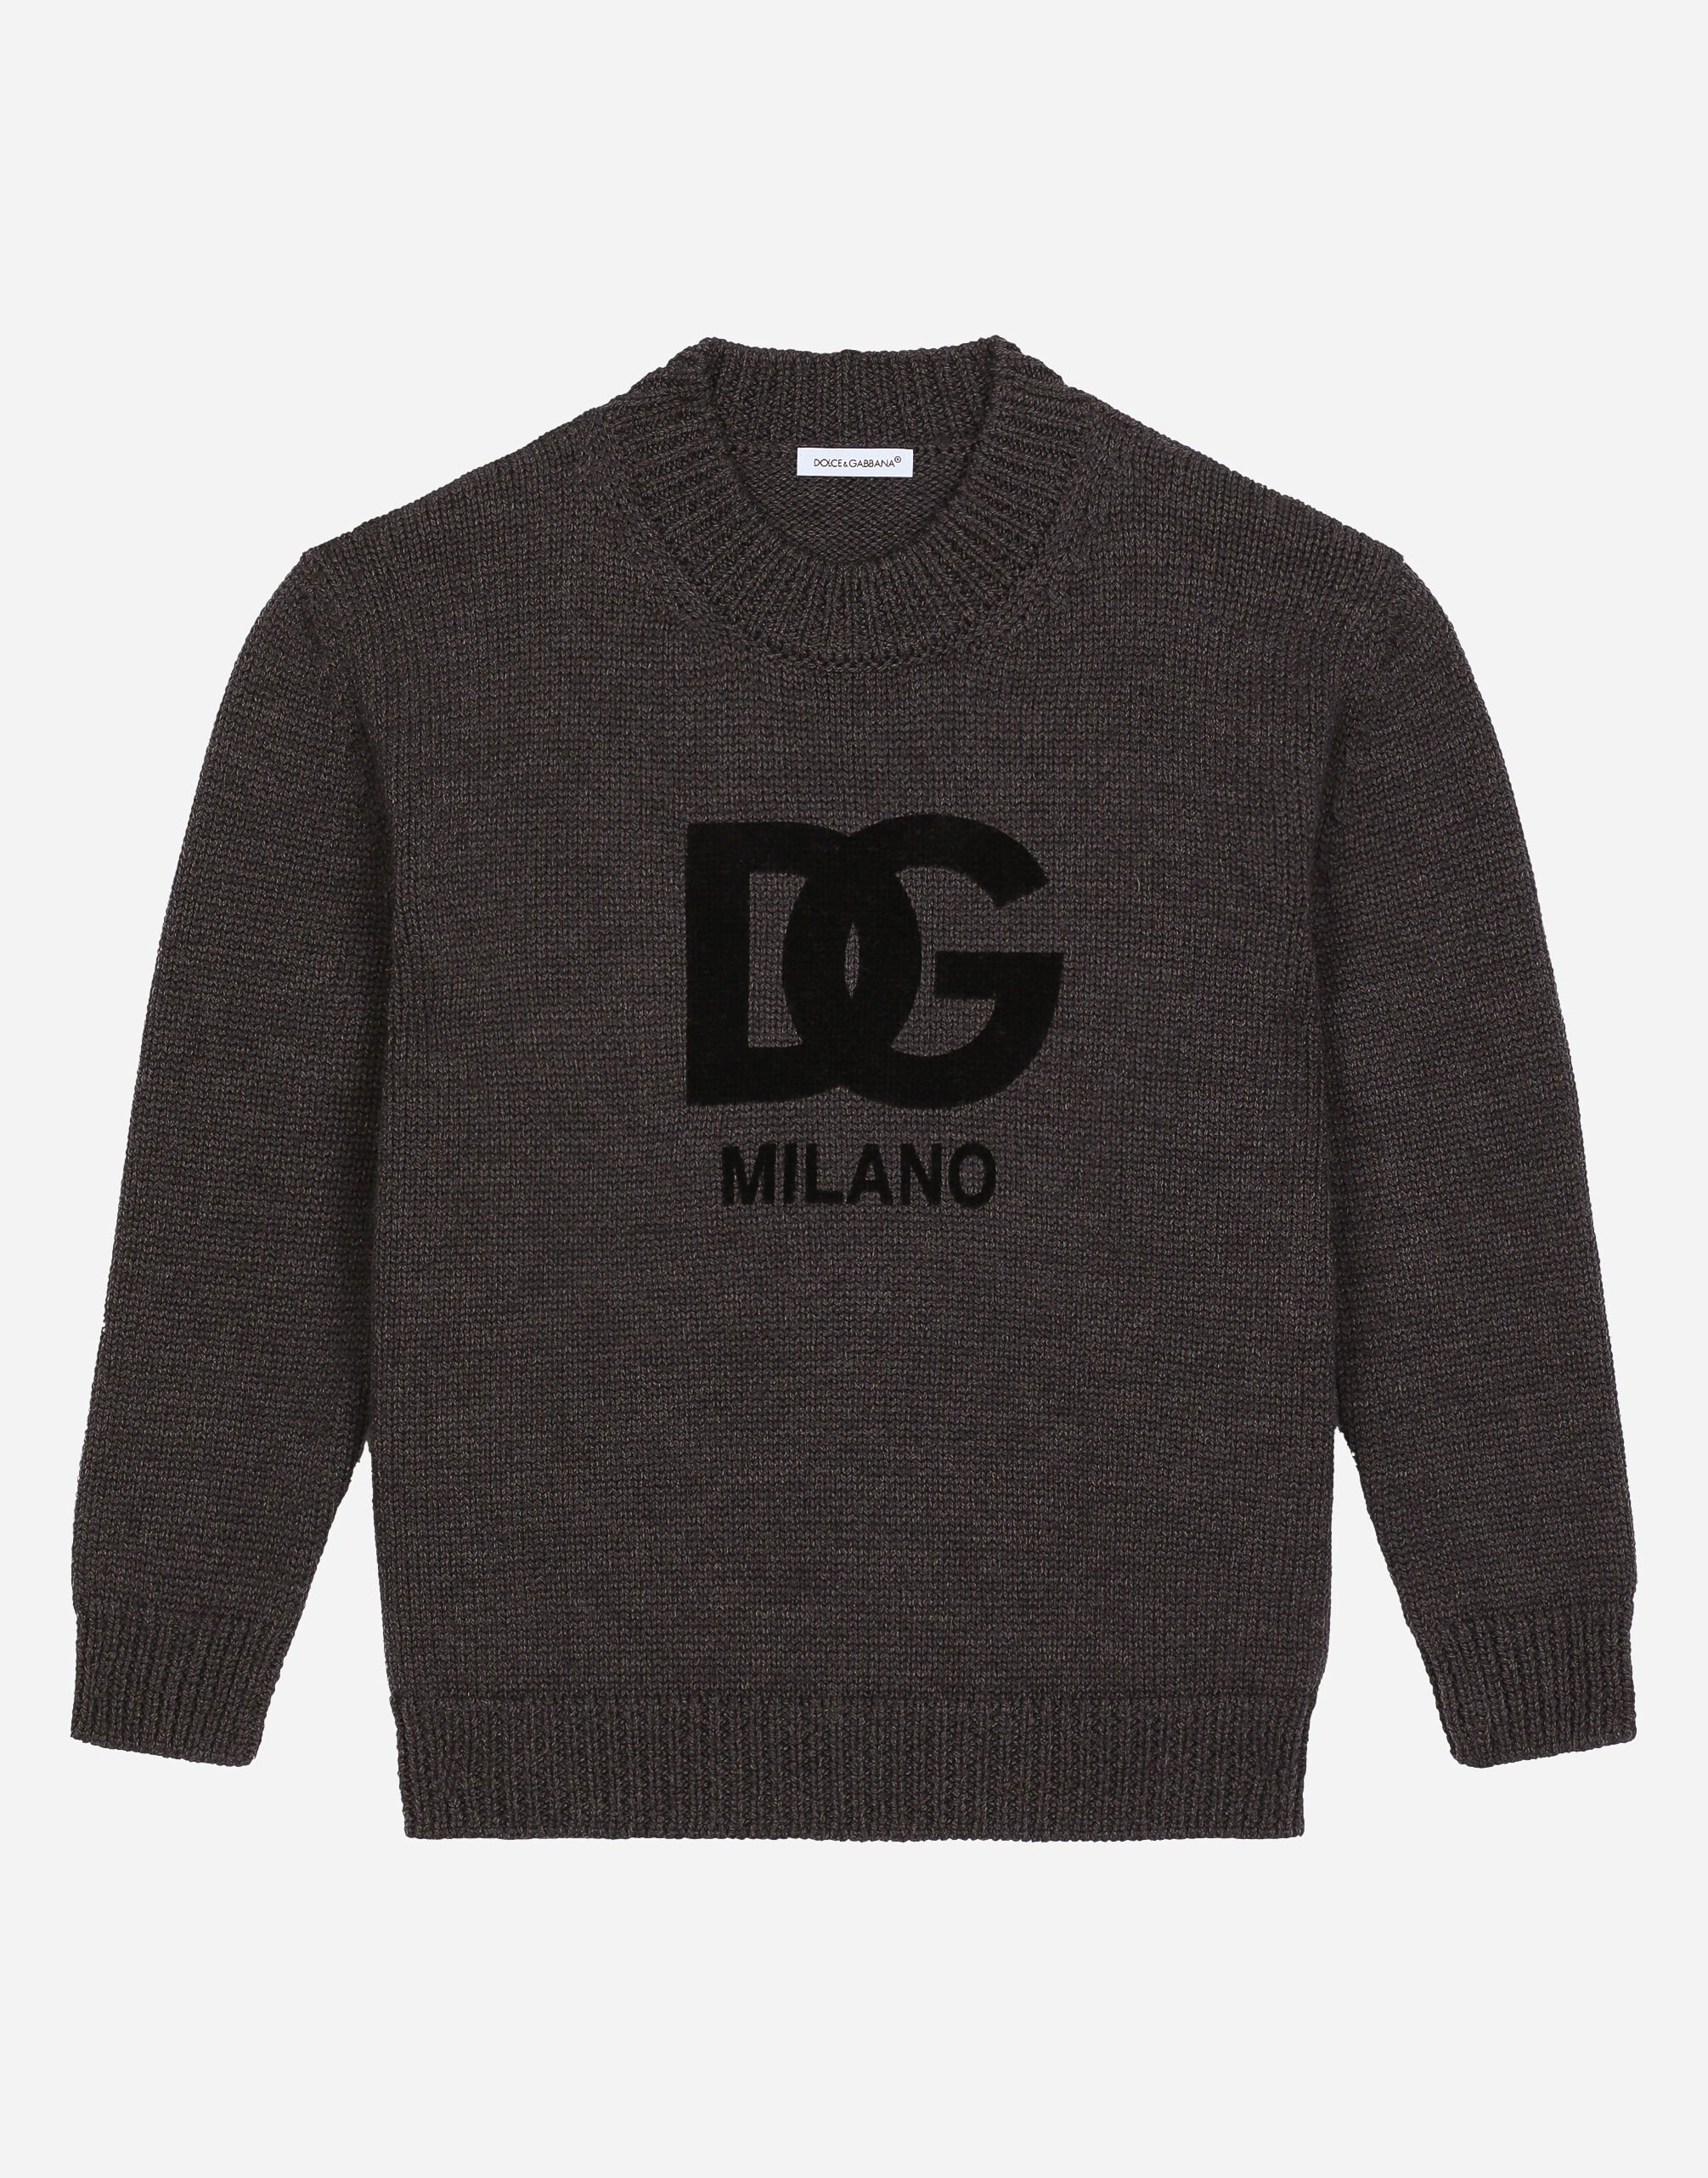 Dolce & Gabbana سترة صوف بياقة دائرية وشعار DG فلوك أسود L4KWE1JCVR9